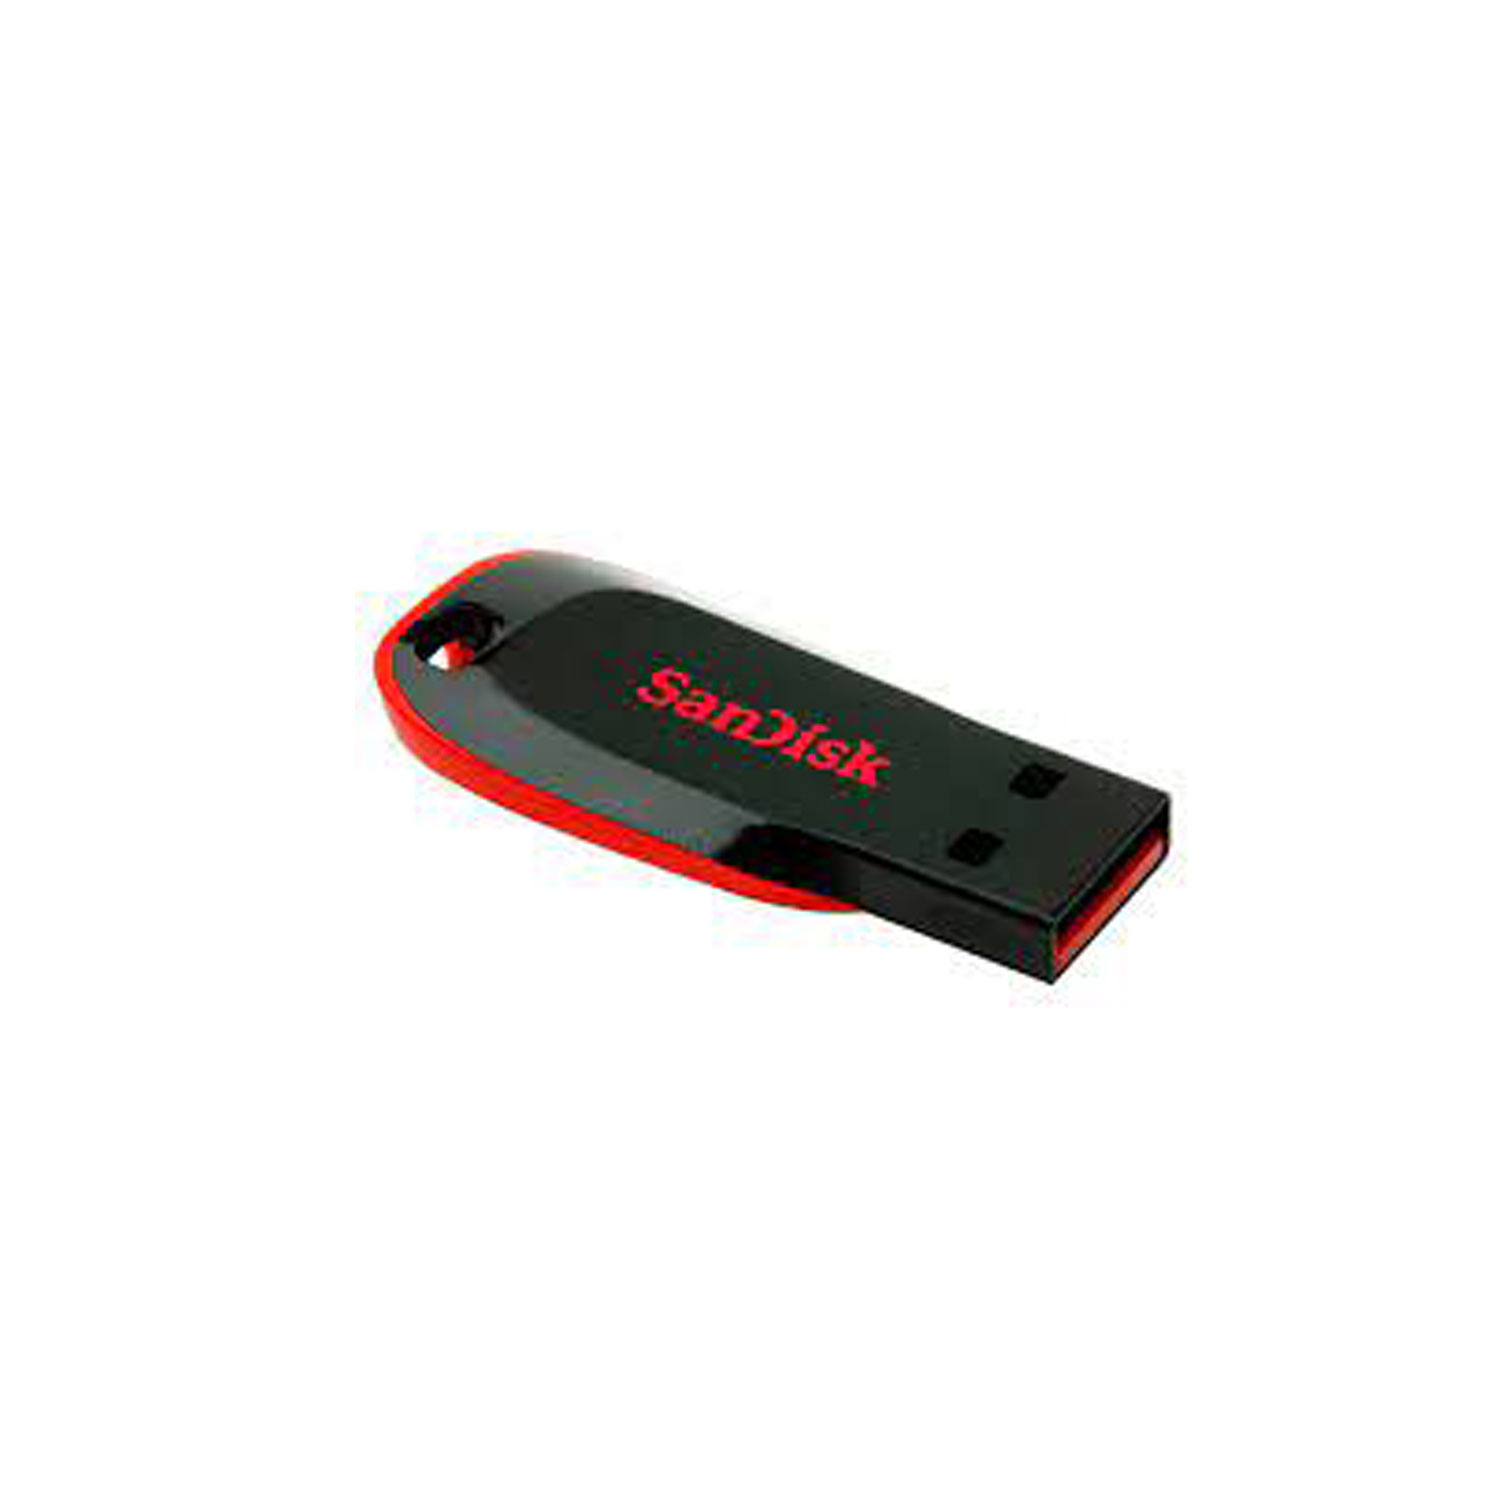 Sandisk Cruzer Blade 32 GB USB Flash Drive